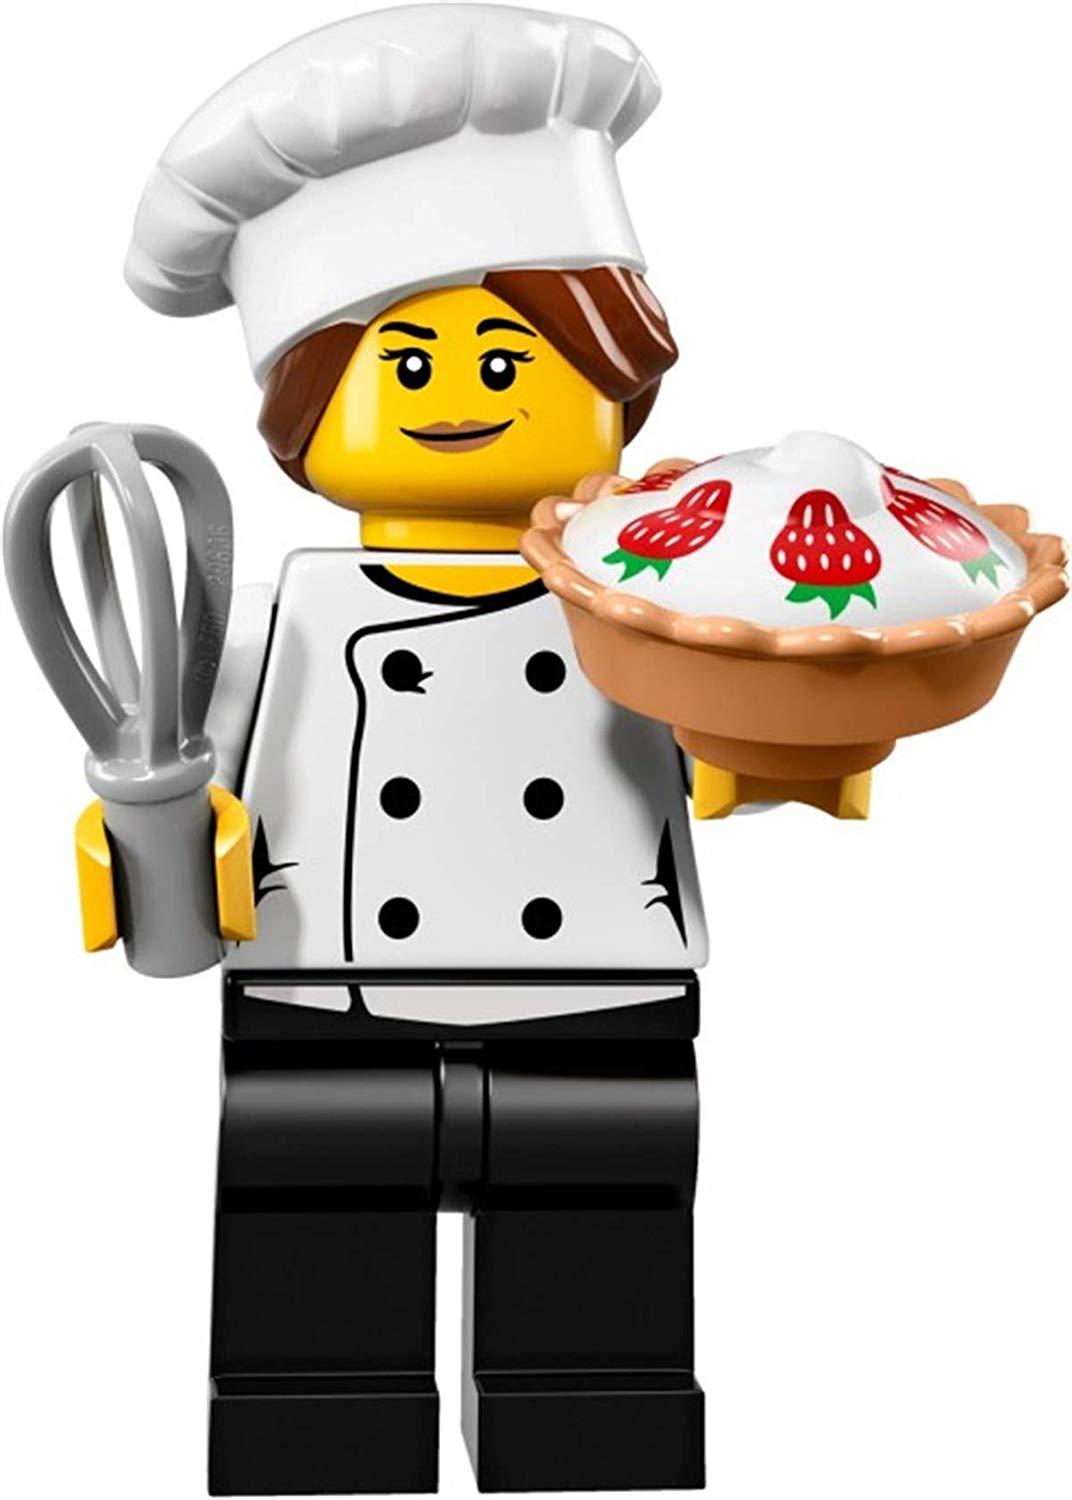 LEGO Minif igures Series 17 # 3 Gourmet Chef Minif igure – (Bagged) 71018